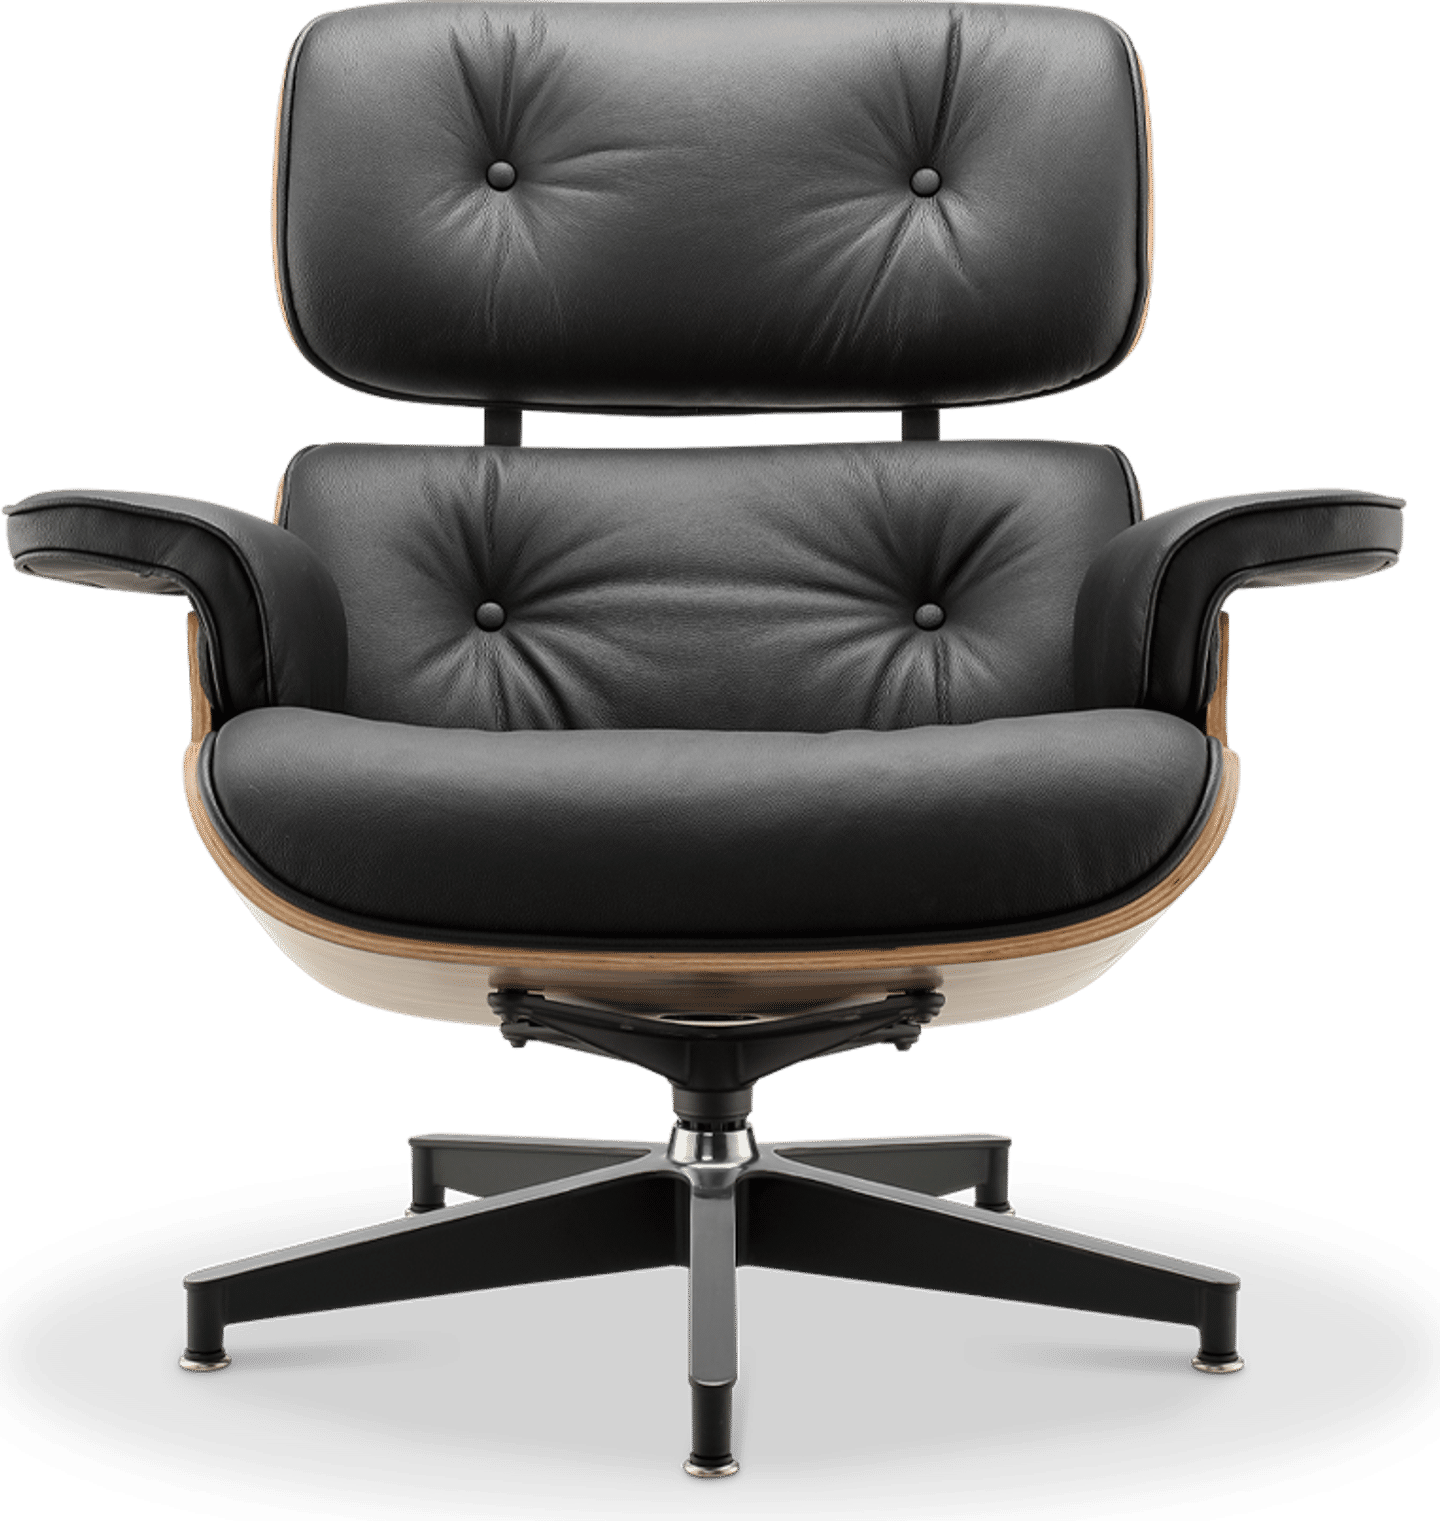 Eames Style Lounge Chair H Miller versjon Italian Leather/Black/Rosewood image.